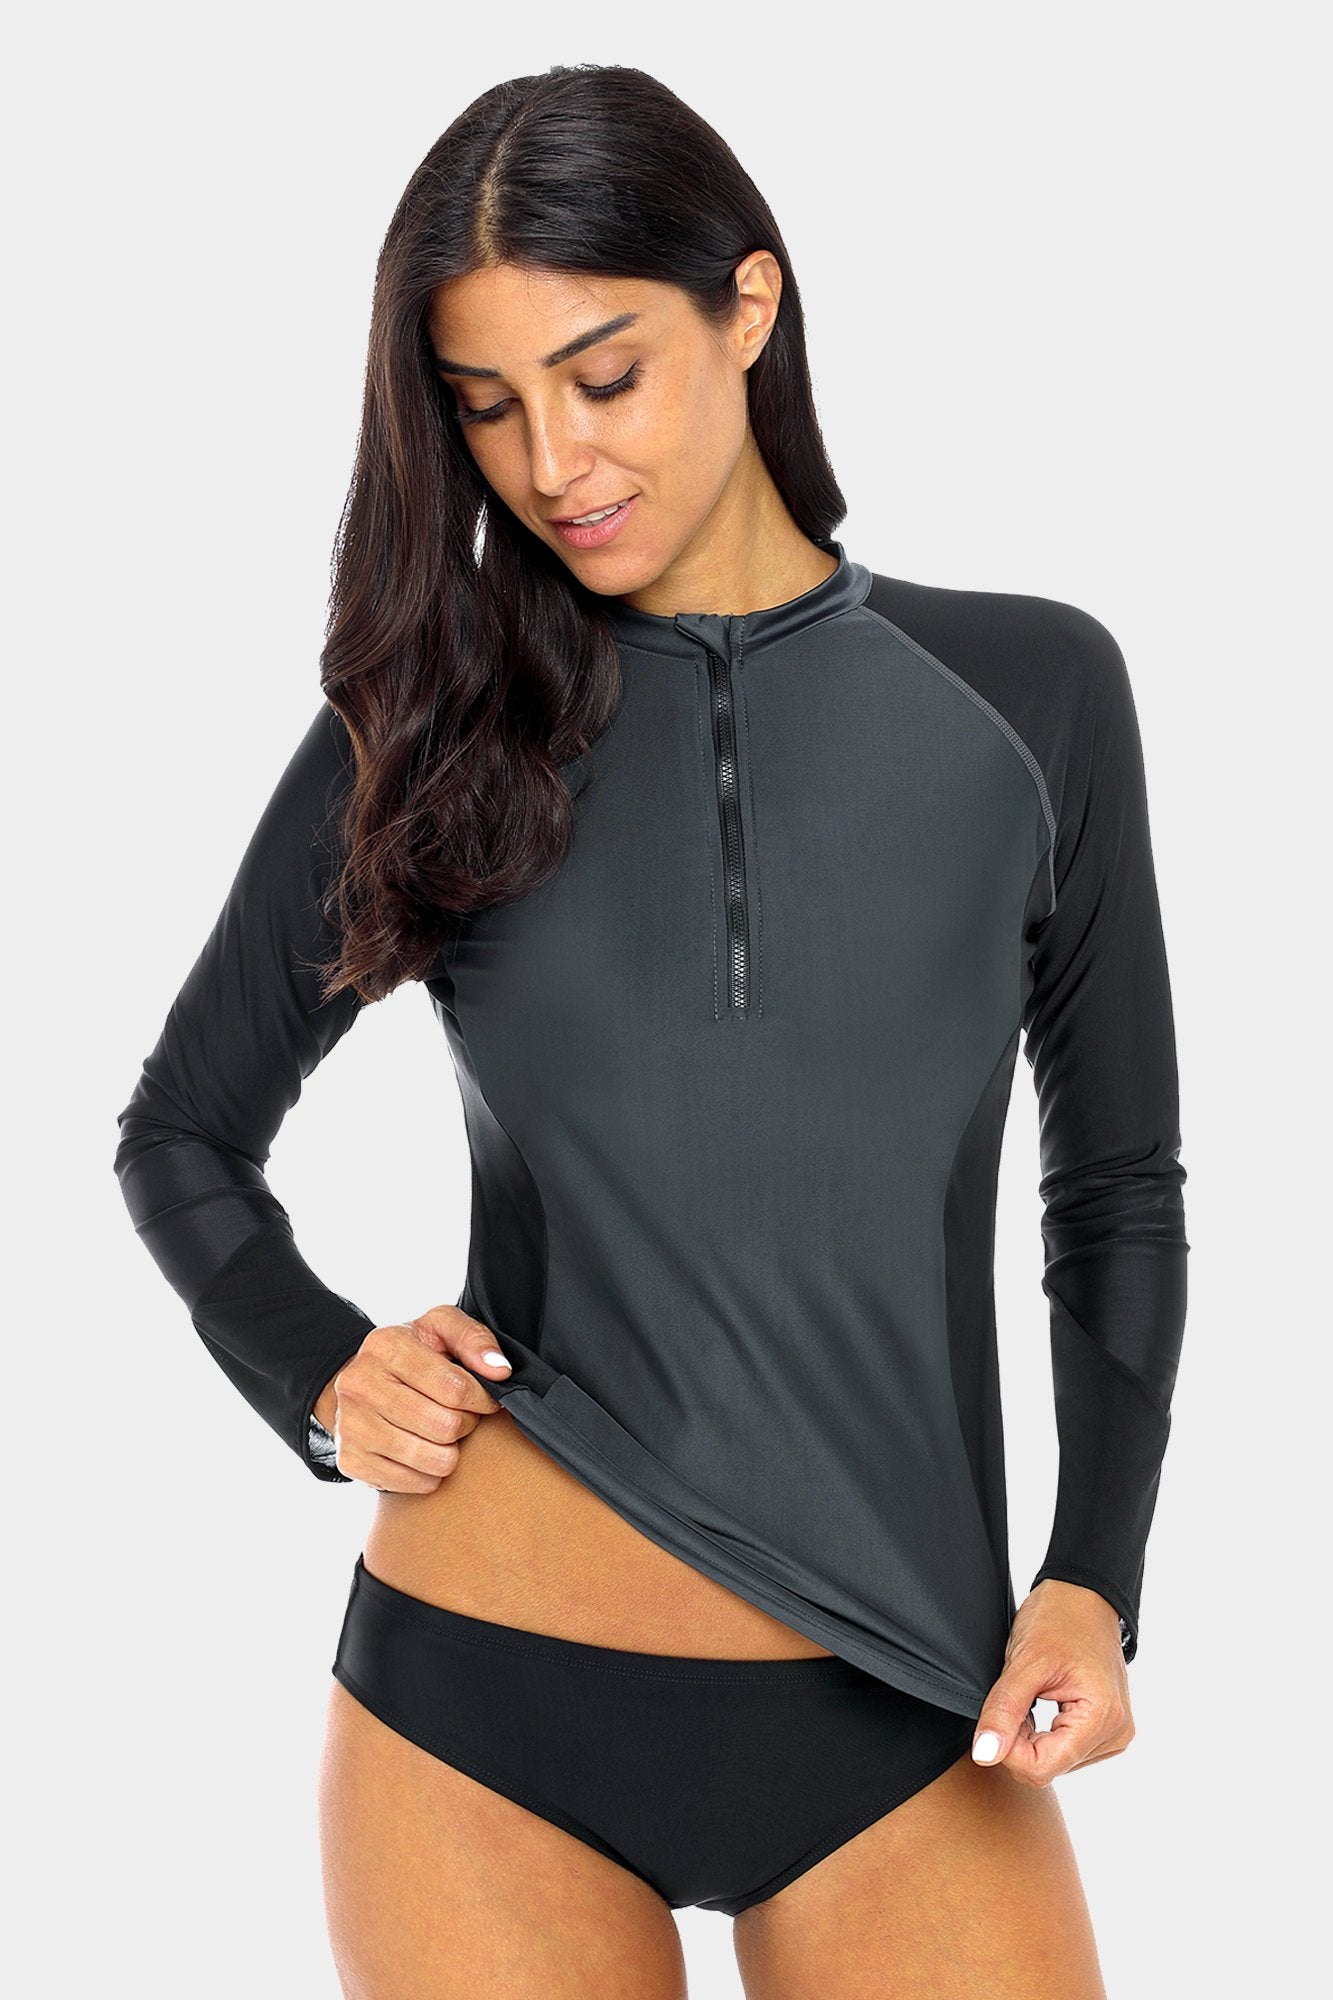 Women's Basic Half-zip UPF 50+ Long Sleeve Rash guard-Attraco | Fashion Outdoor Clothing